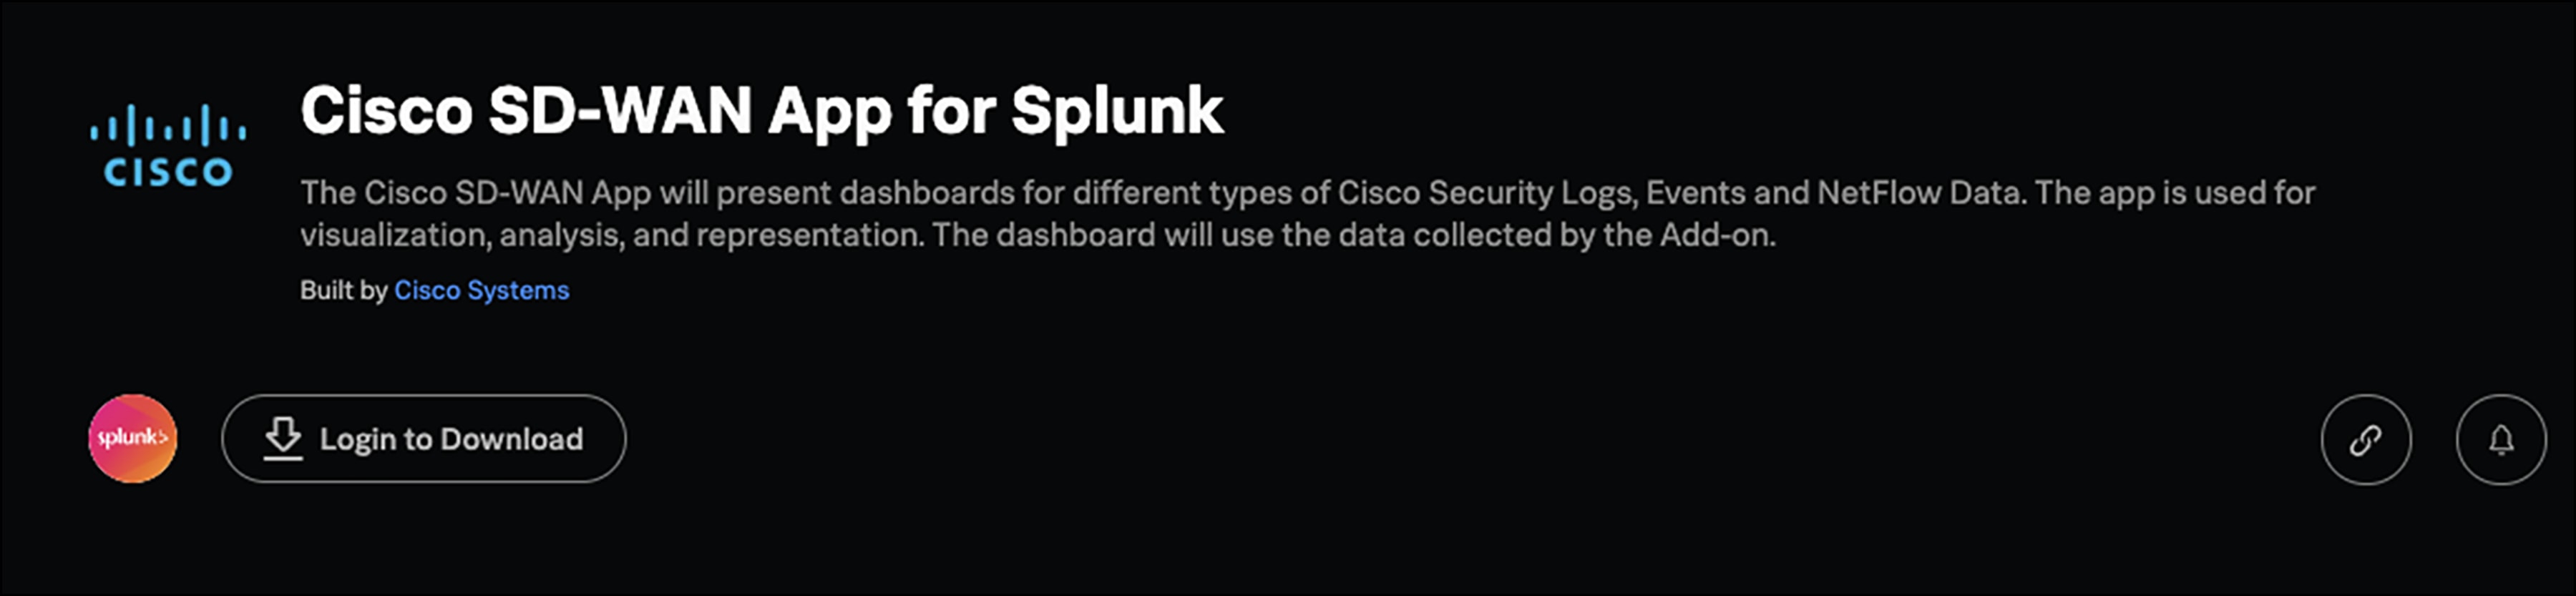 Cisco SD-WAN Application on Splunkbase